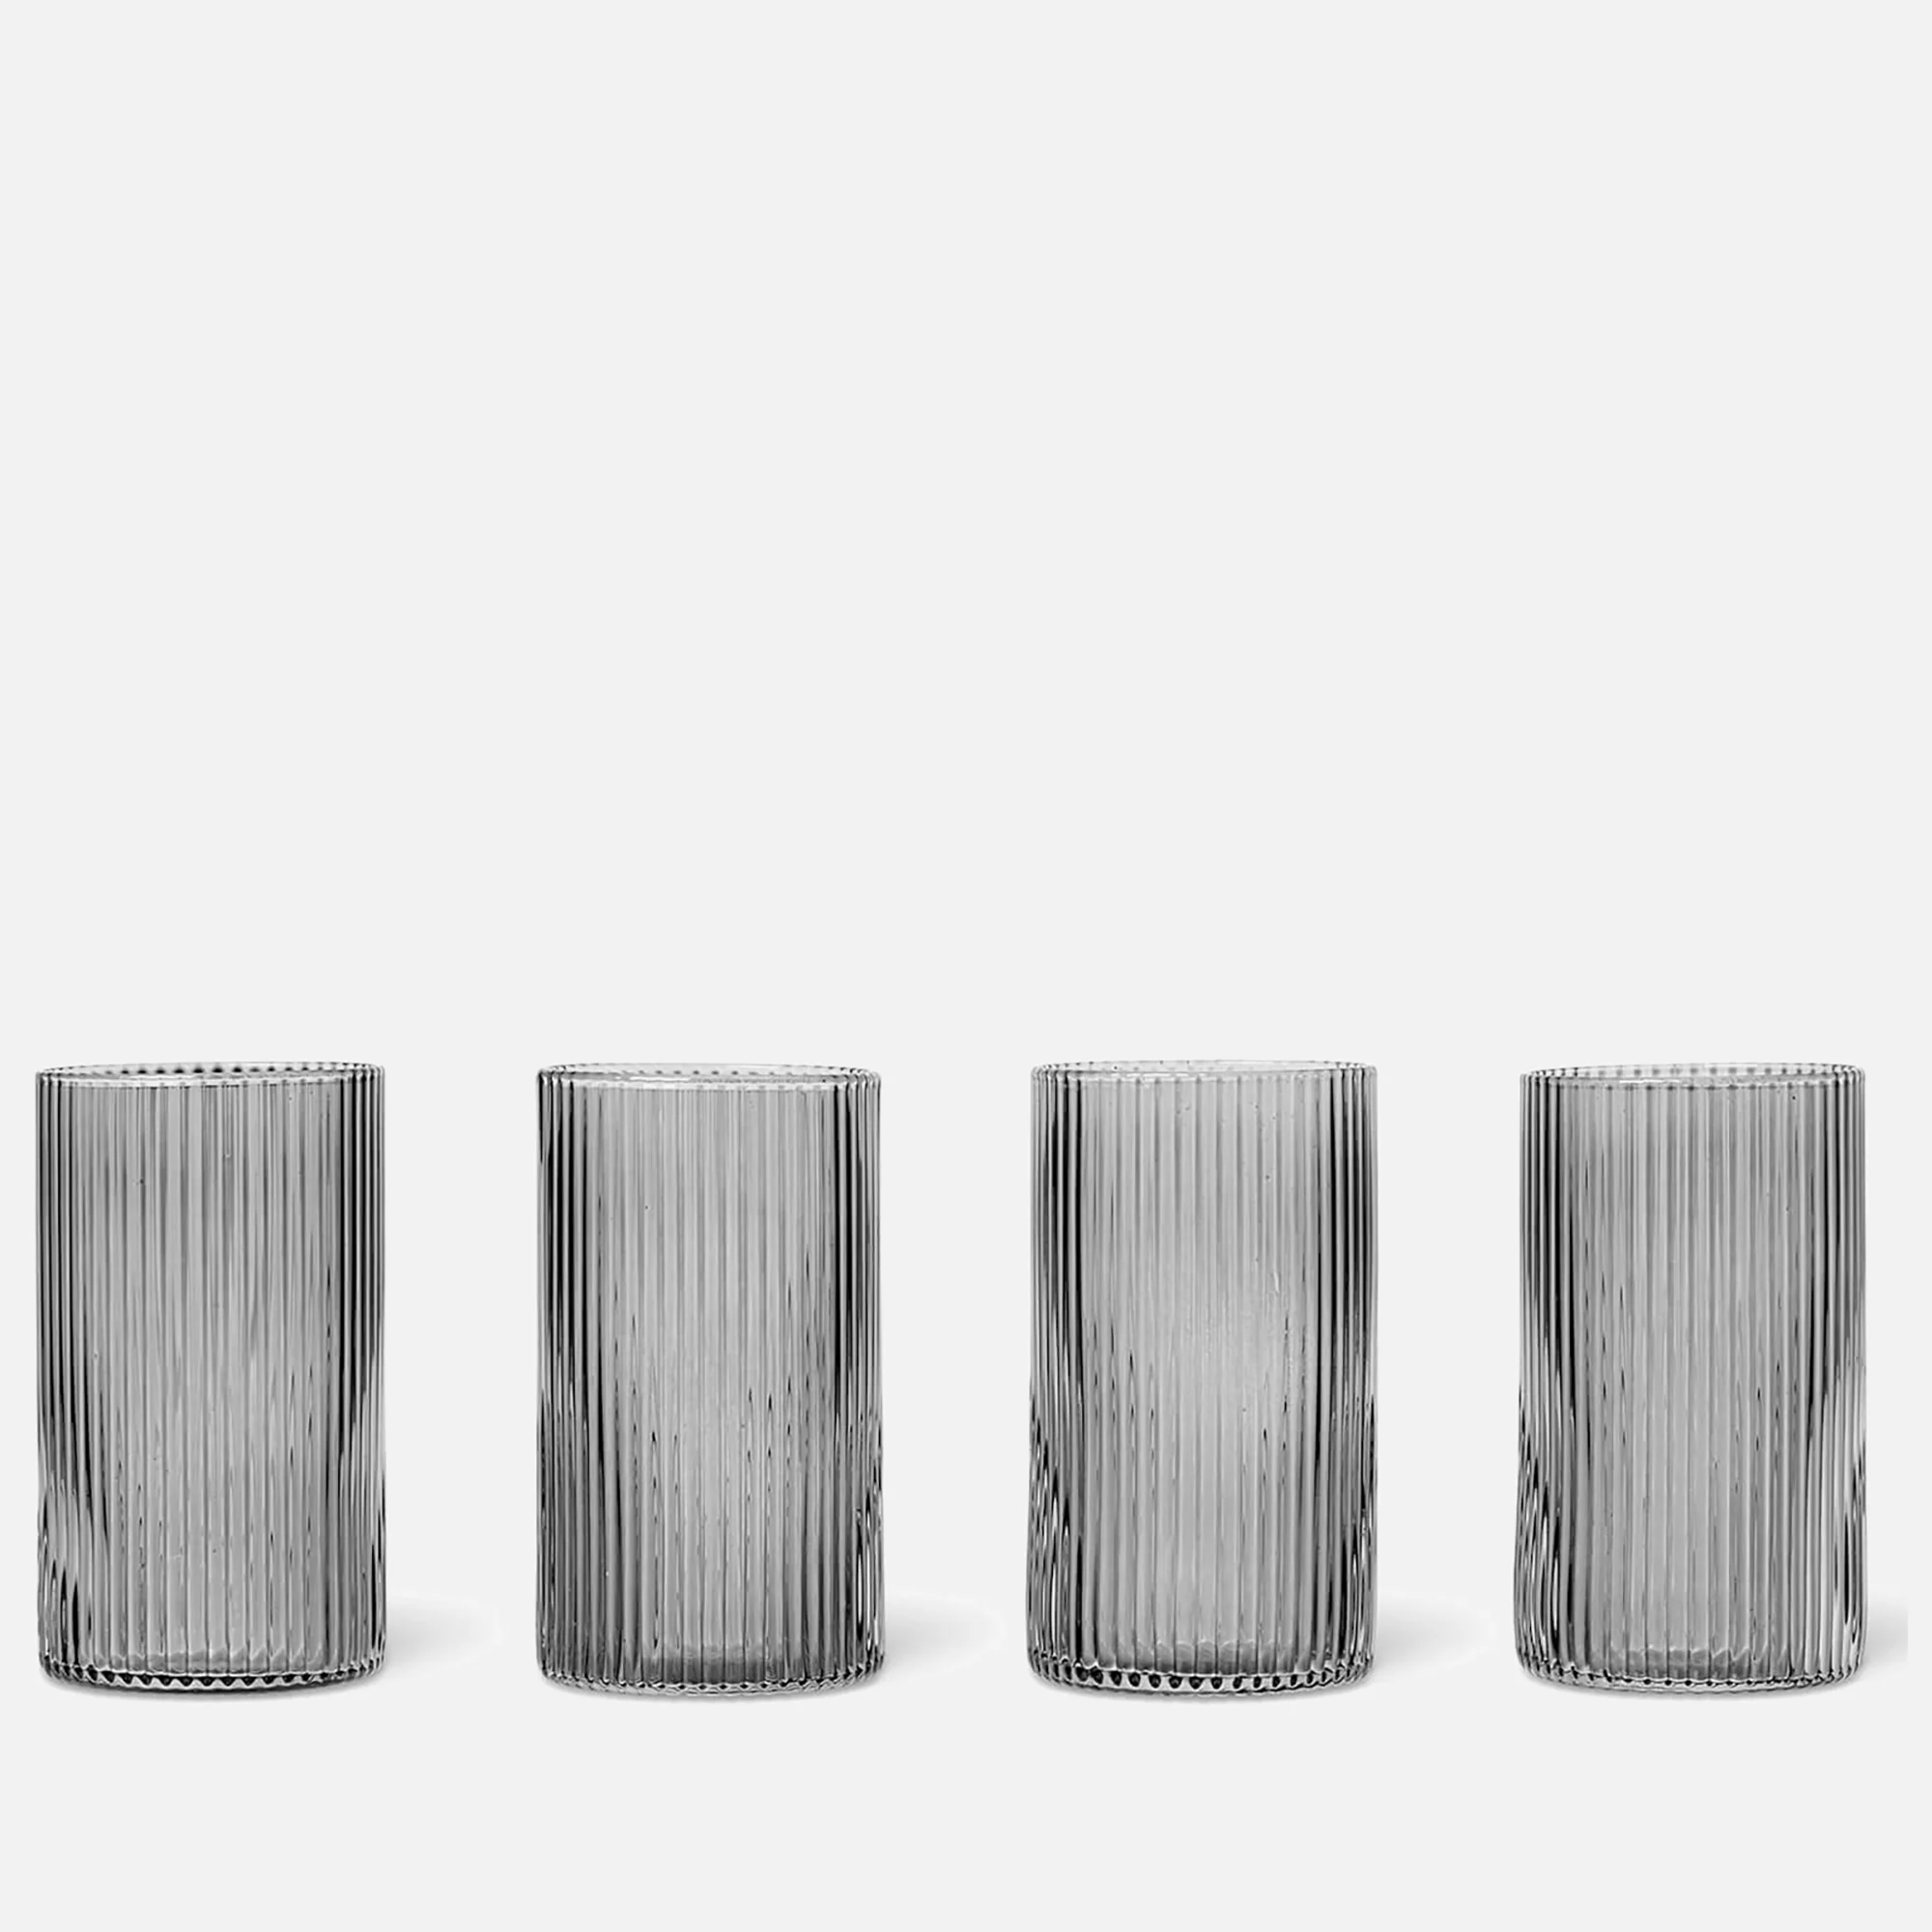 Ferm Living Ripple Verrines - Set of 4 - Smoked Grey Image 1